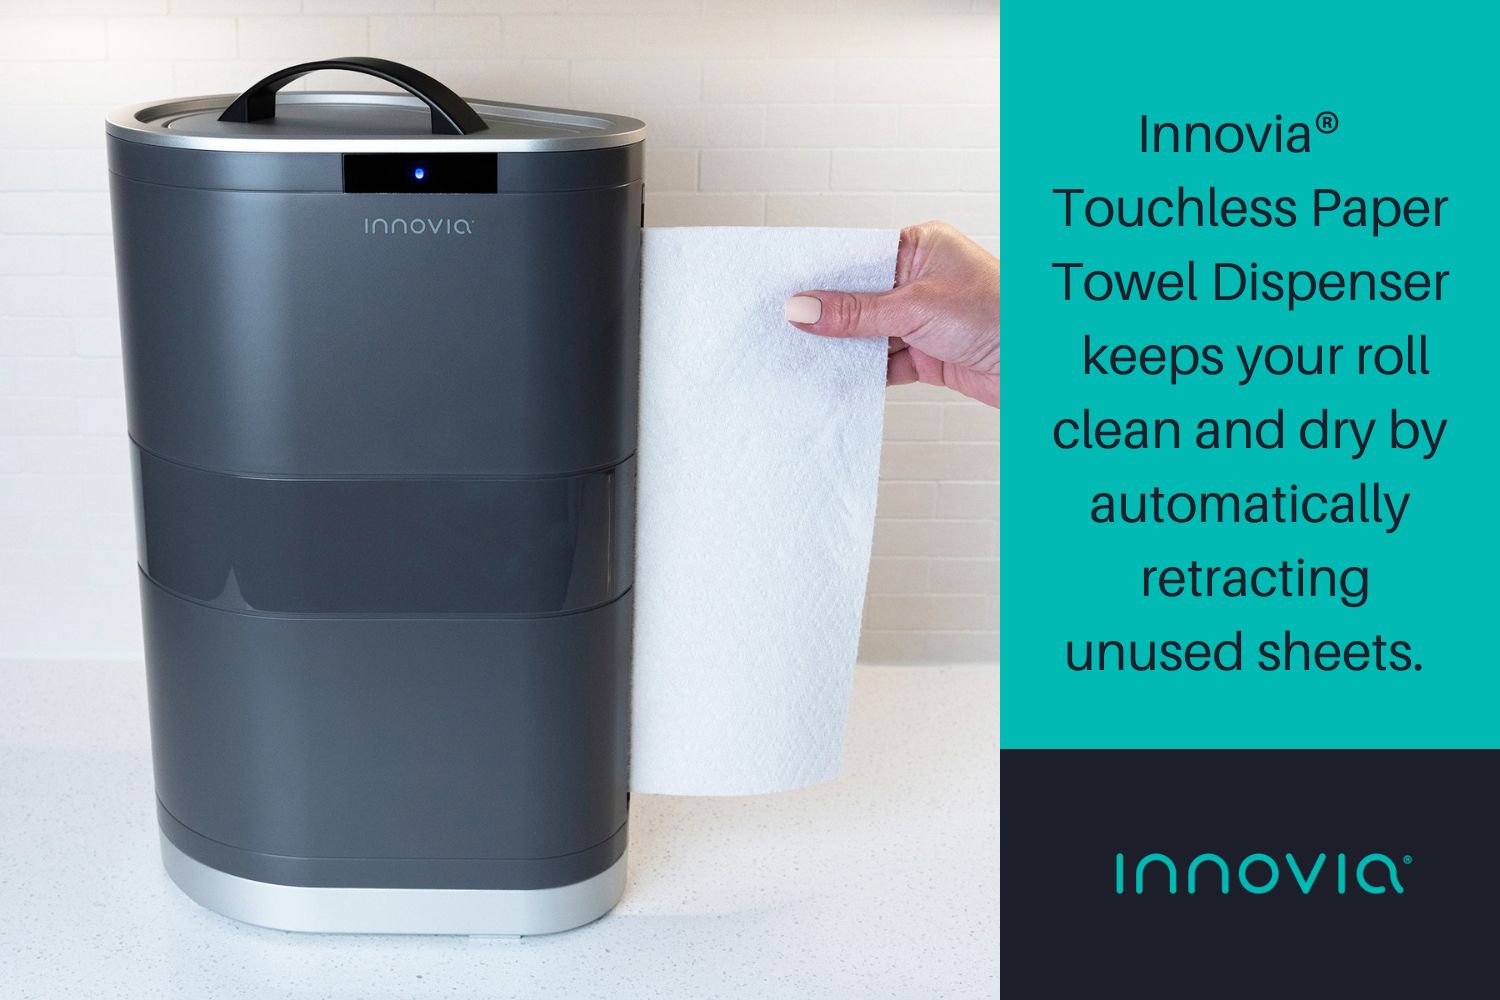 Top Notch Material: Innovia Countertop Paper Towel dispenser